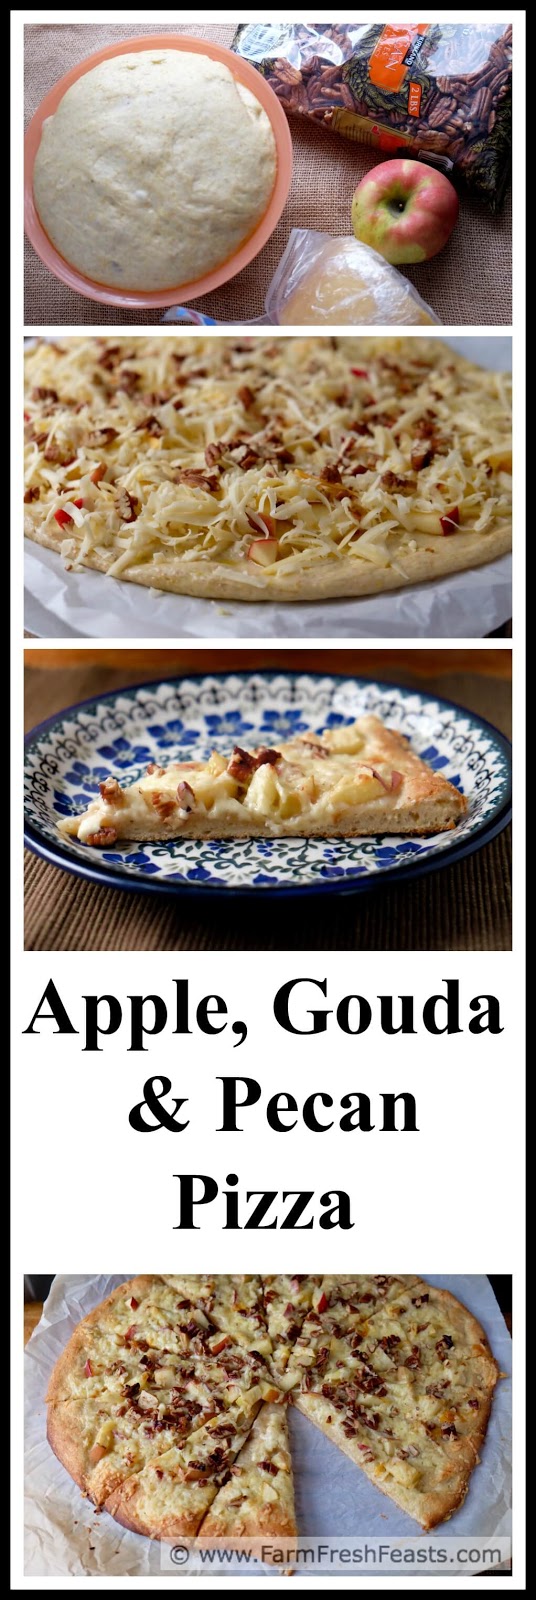 http://www.farmfreshfeasts.com/2015/09/apple-gouda-and-pecan-pizza.html